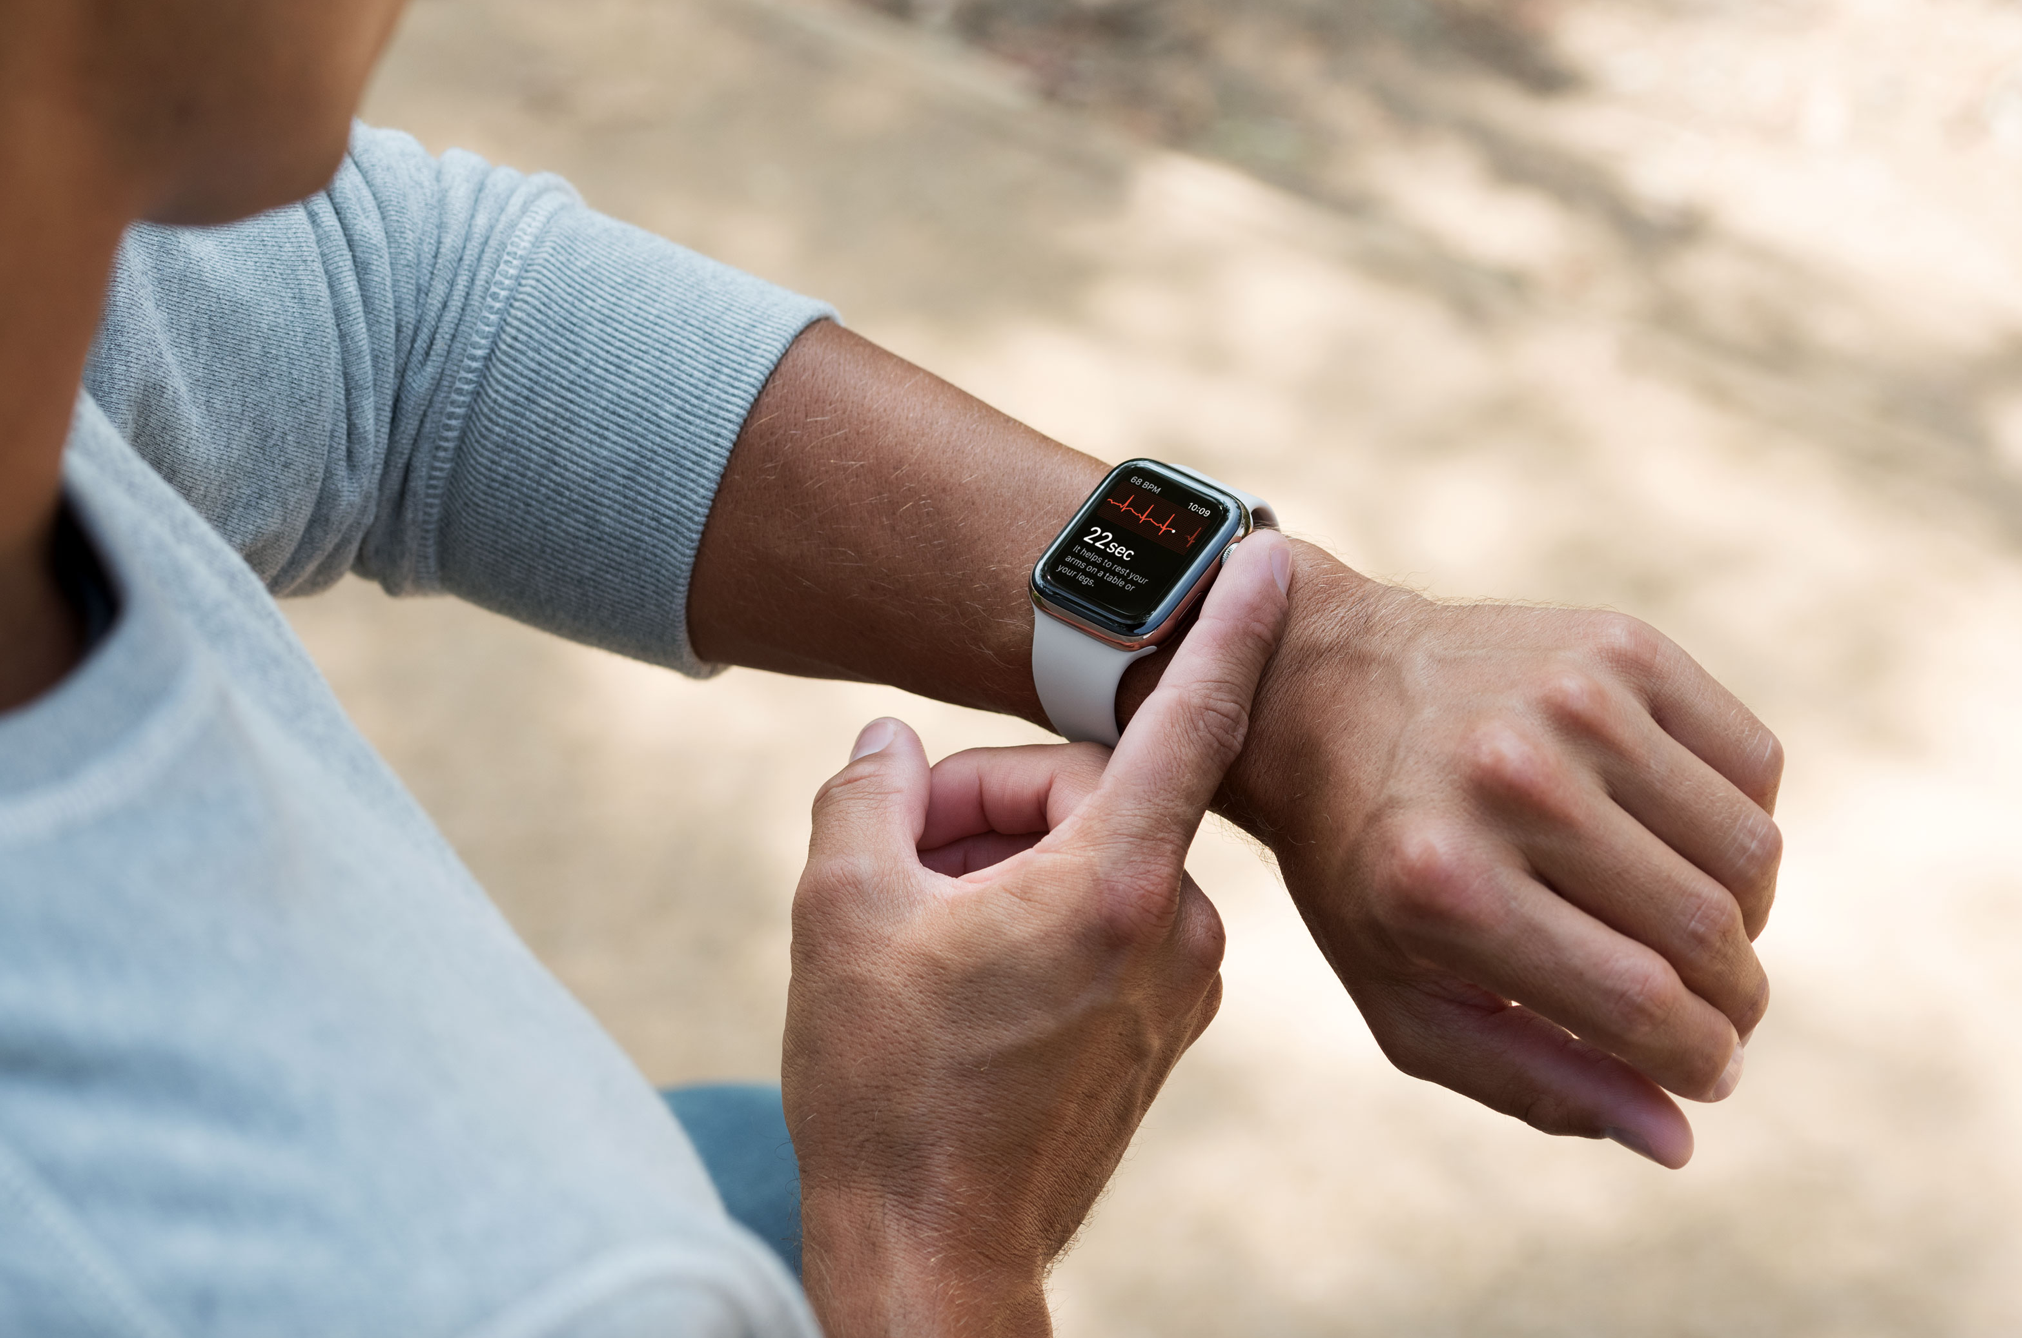 delik Güney Amerika Adli tıp  Apple Watch Series 4 review - features, design, ECG, more - 9to5Mac